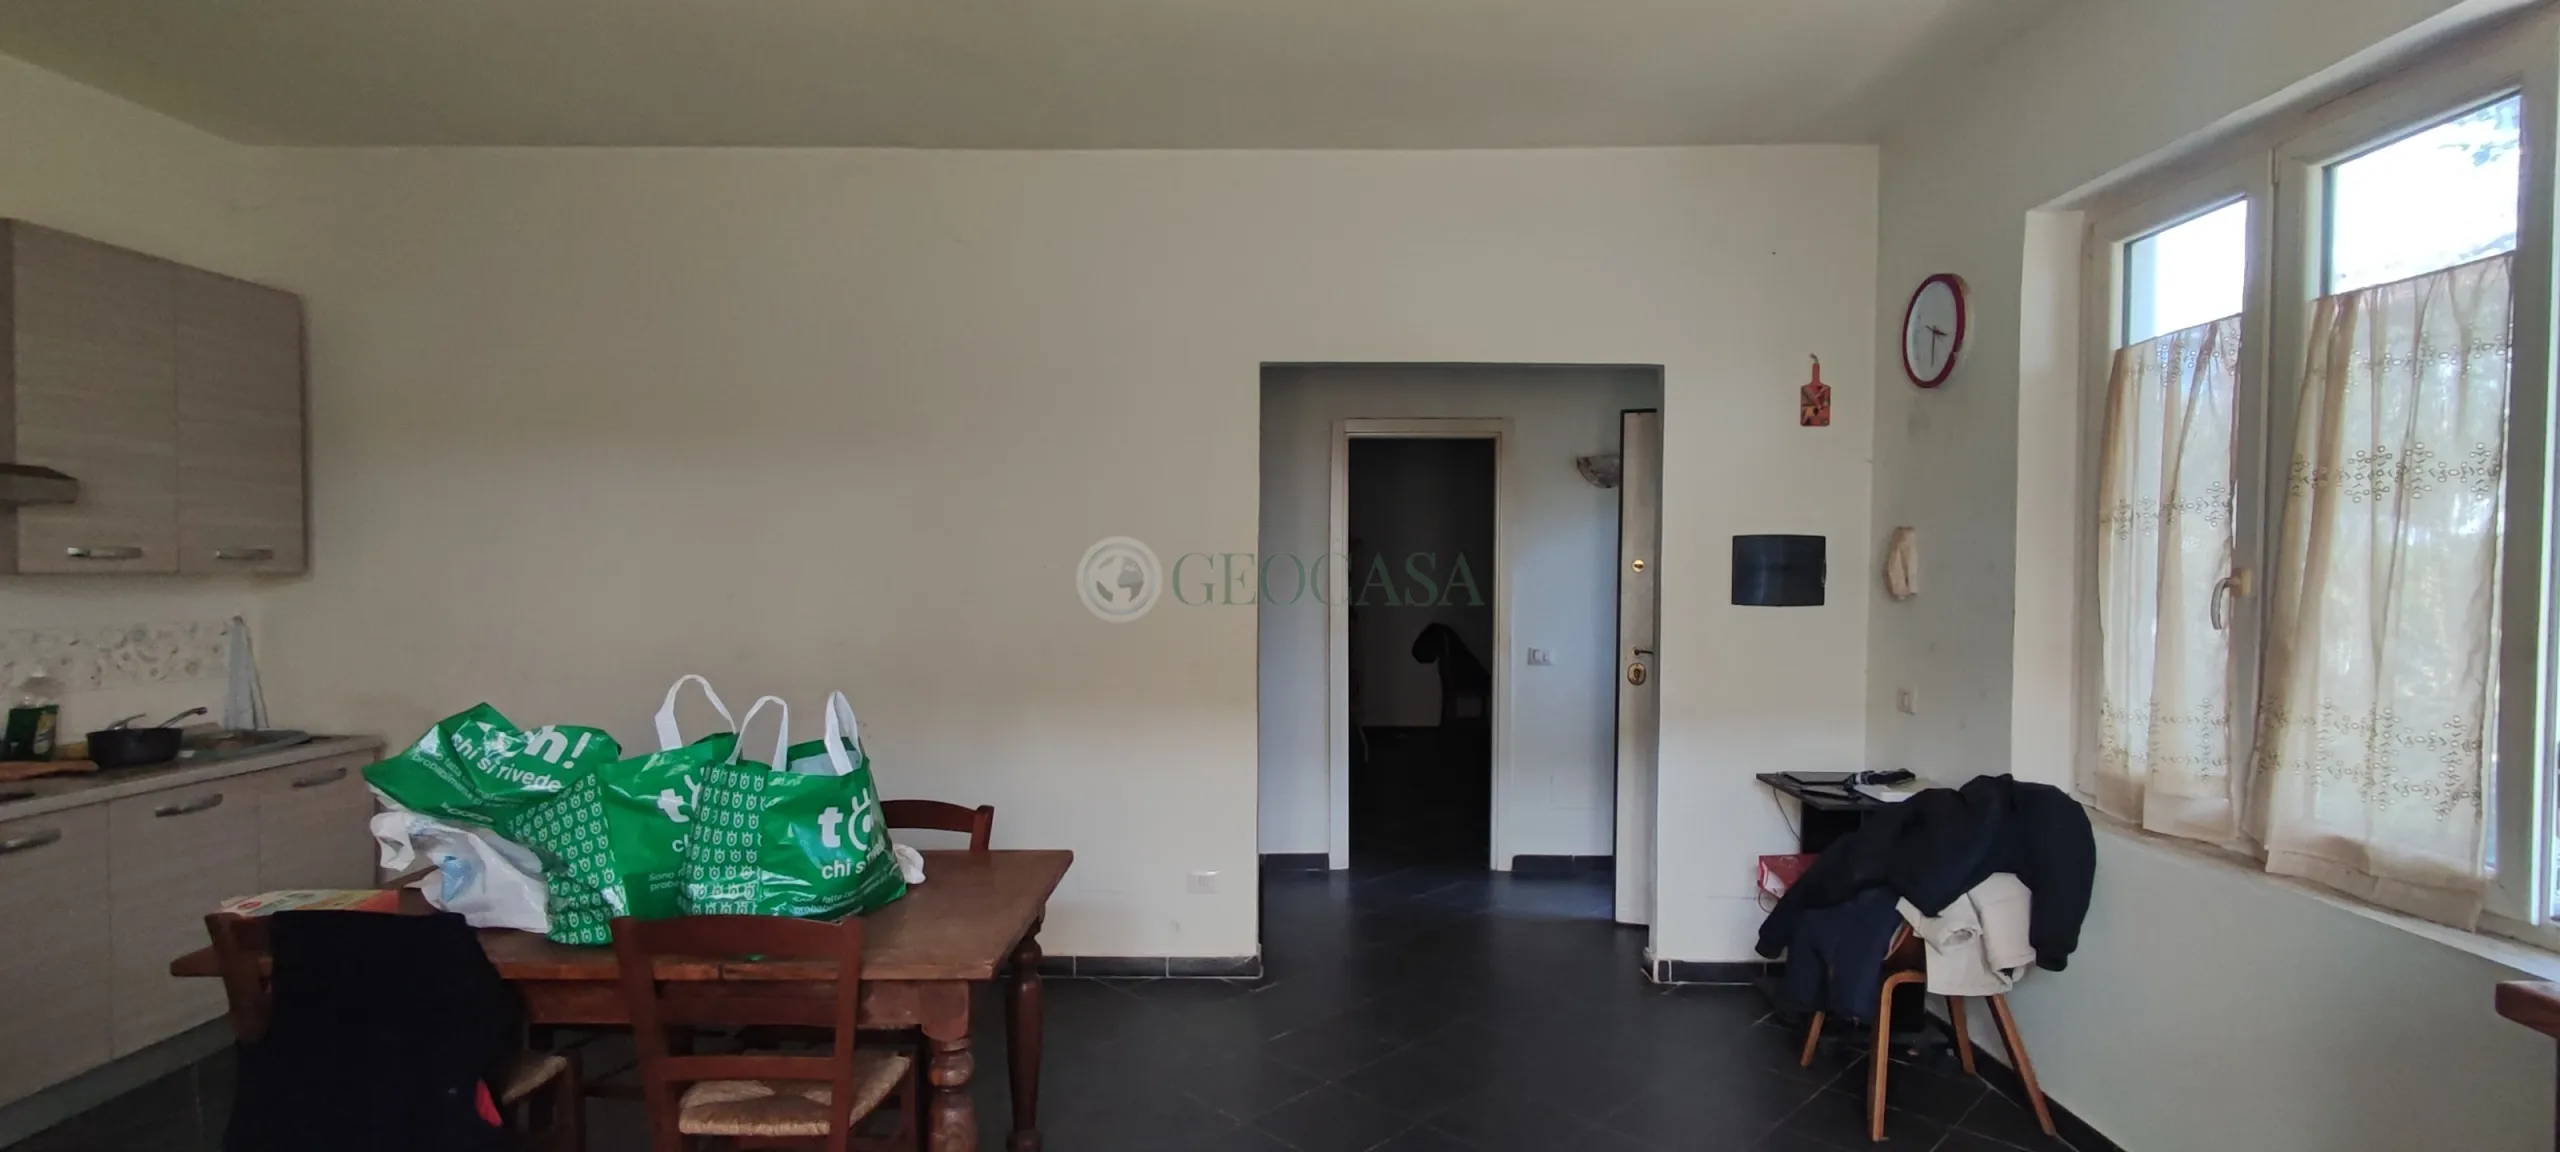 Immagine per Porzione di casa in vendita a Sarzana via Turì 21